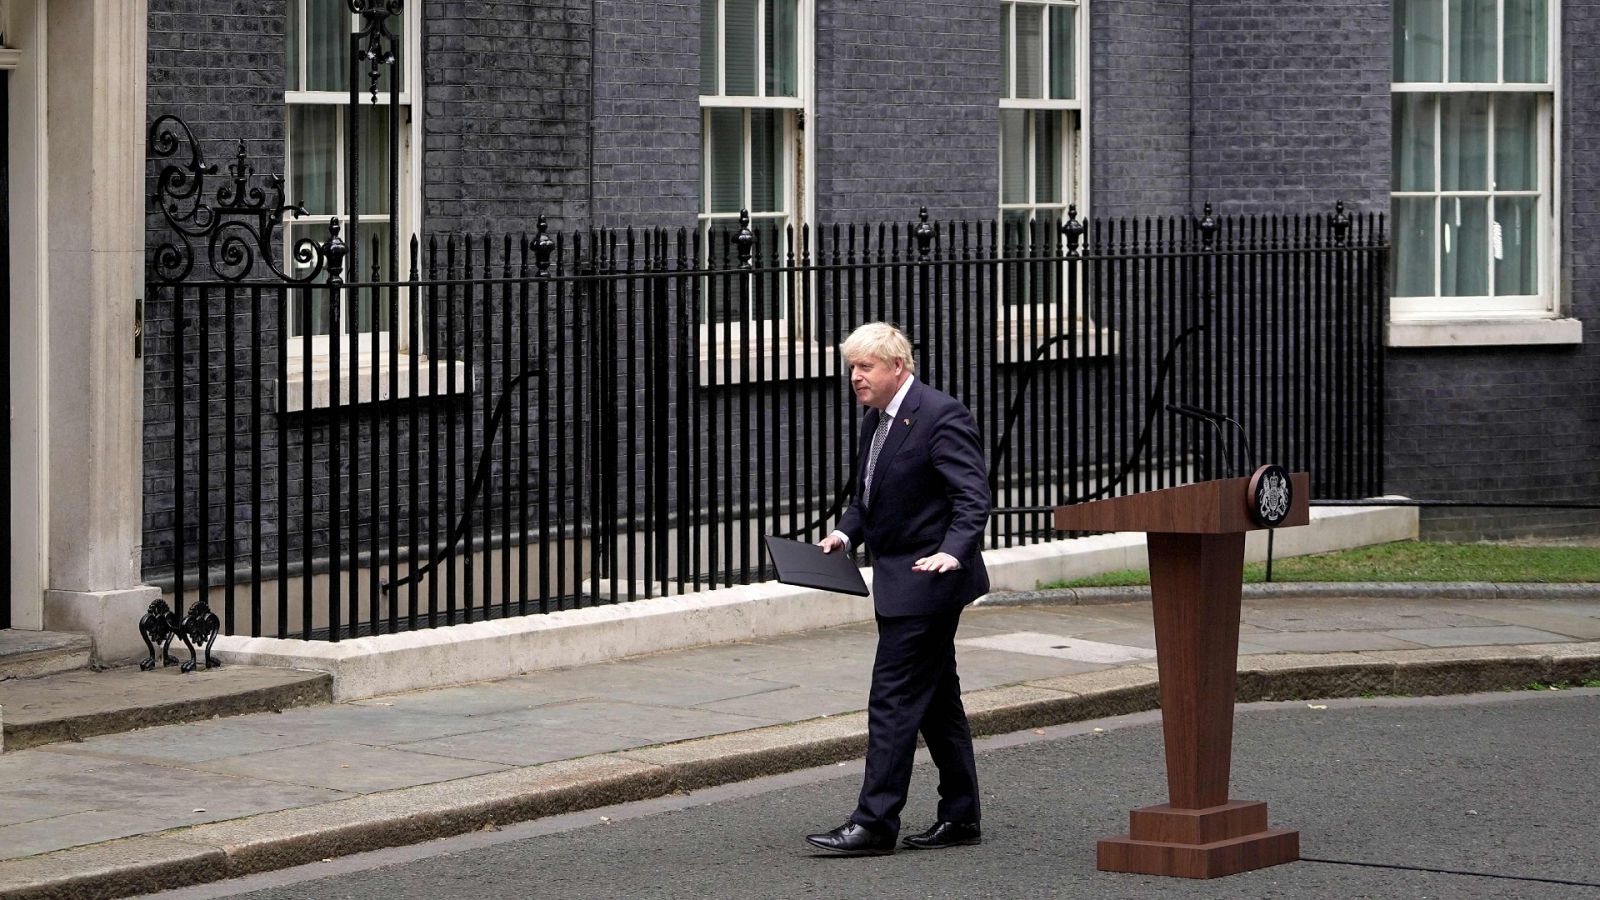 14 horas - Johnson dimite como primer ministro: "Nadie es indispensable" - Escuchar ahora